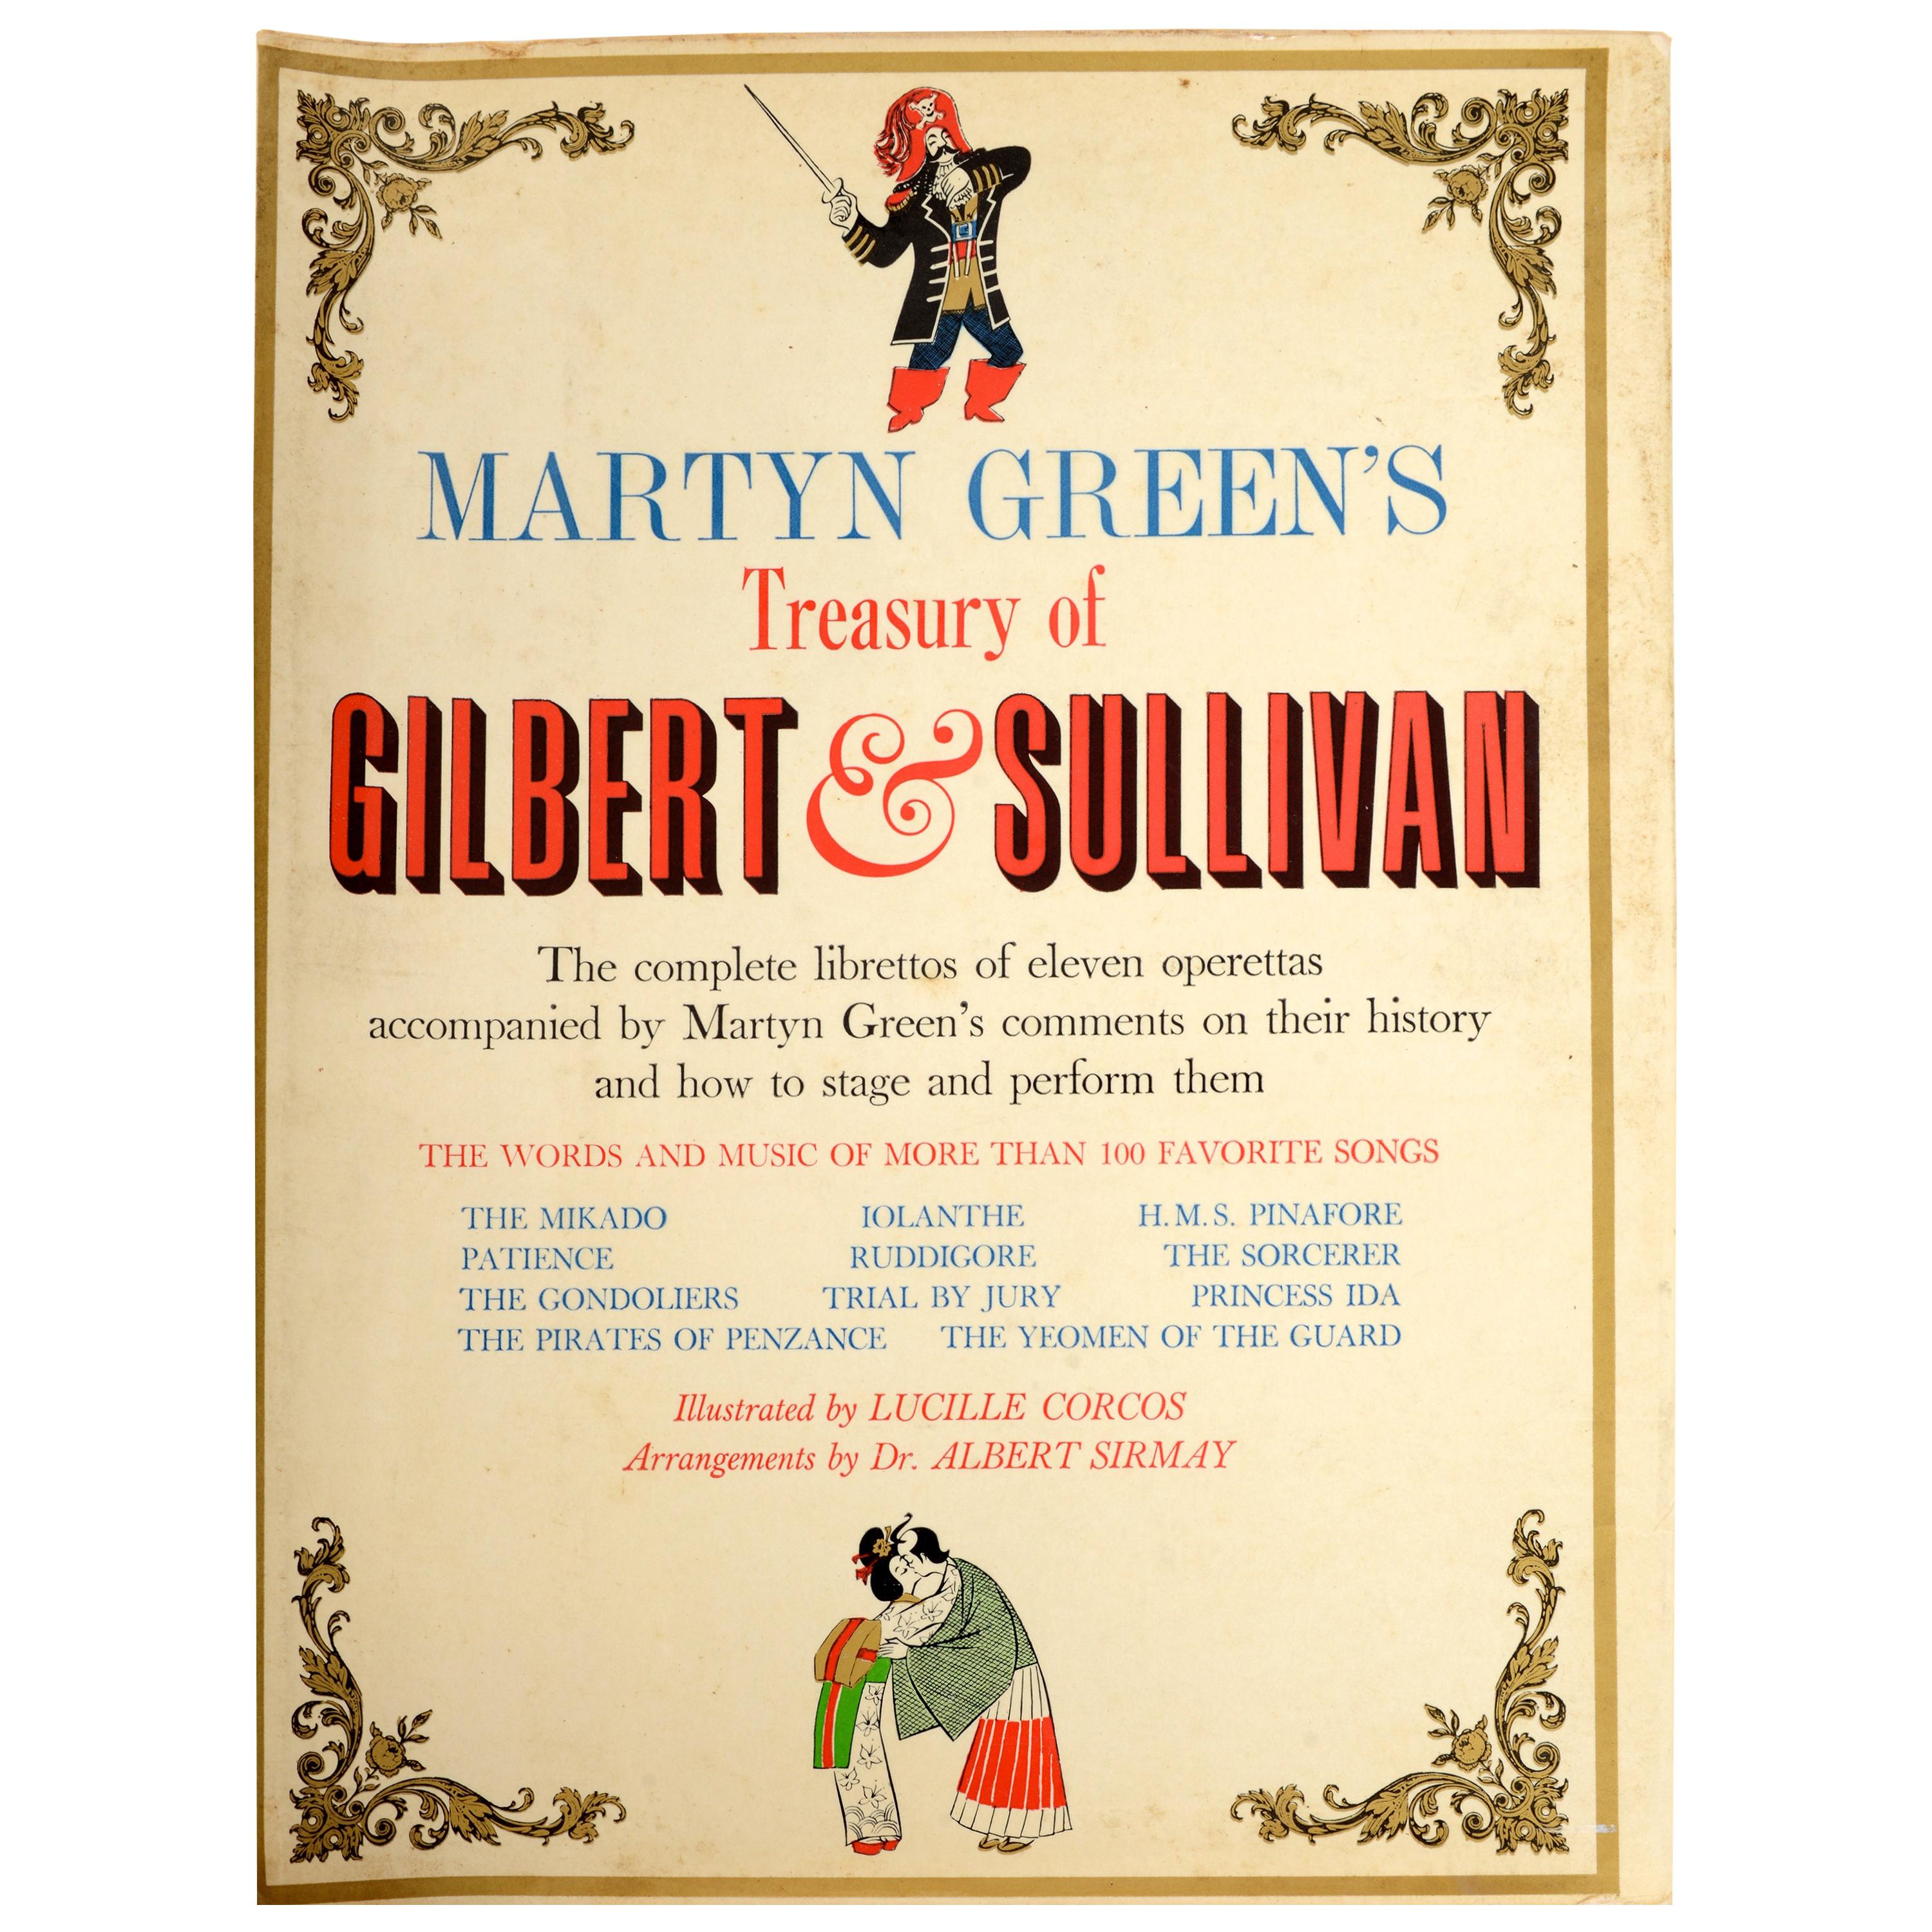 Treasury of Gilbert and Sullivan de Martyn Green, estampe de la première fois signée